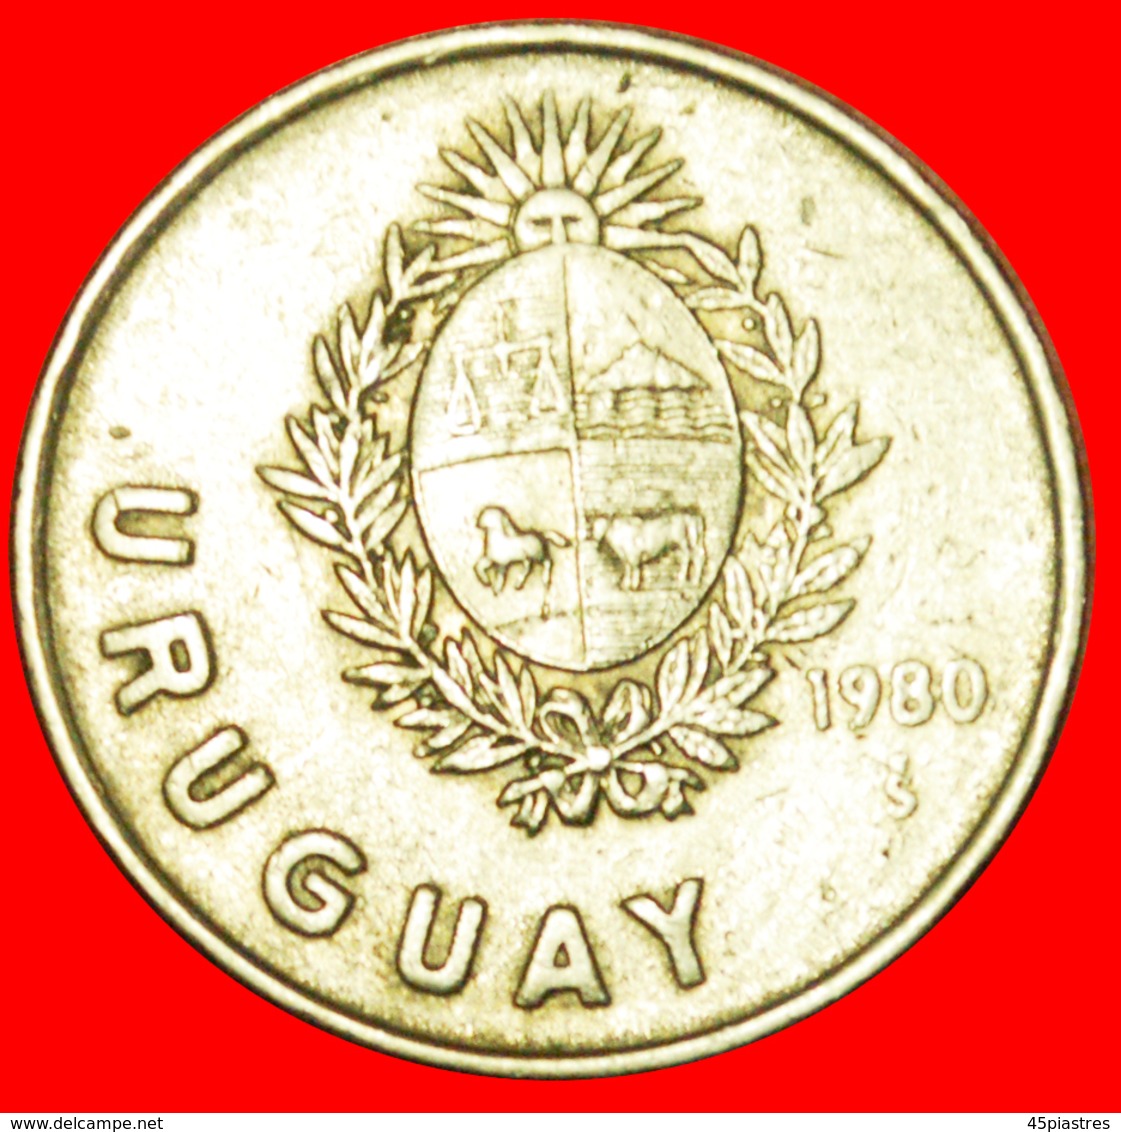 + CHILE: URUGUAY ★ 1 NEW PESO 1980! LOW START ★ NO RESERVE! - Uruguay